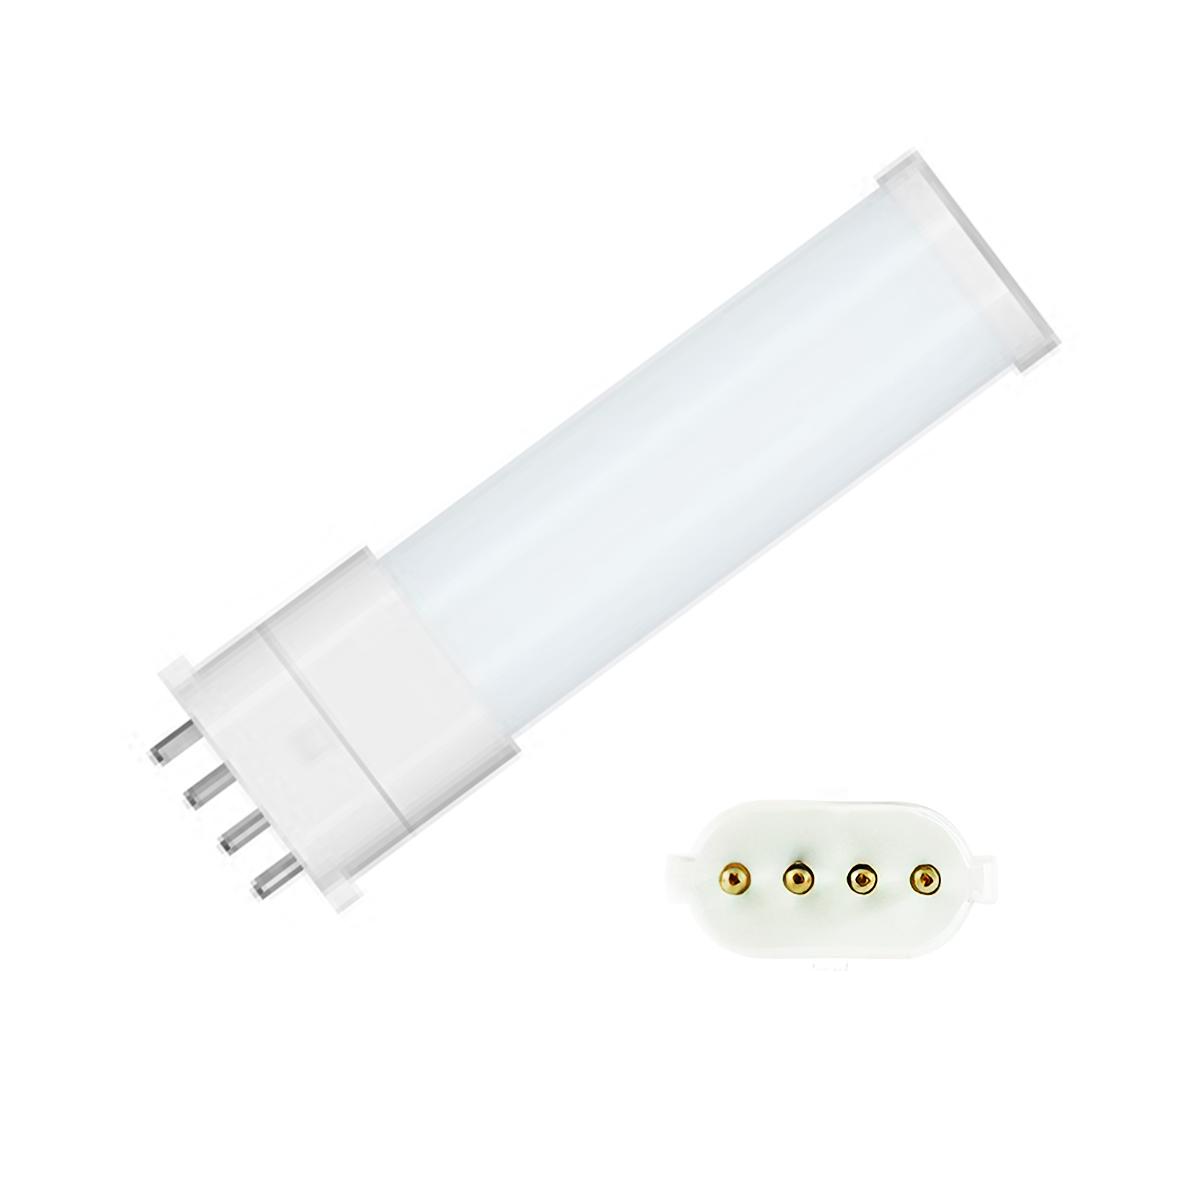 4 Pin PLL LED Bulb, 3.5 Watt 360 Lumens, 4100K, Horizontal, Replaces 9W CFL, 2G7 Base, Type B Ballast Bypass